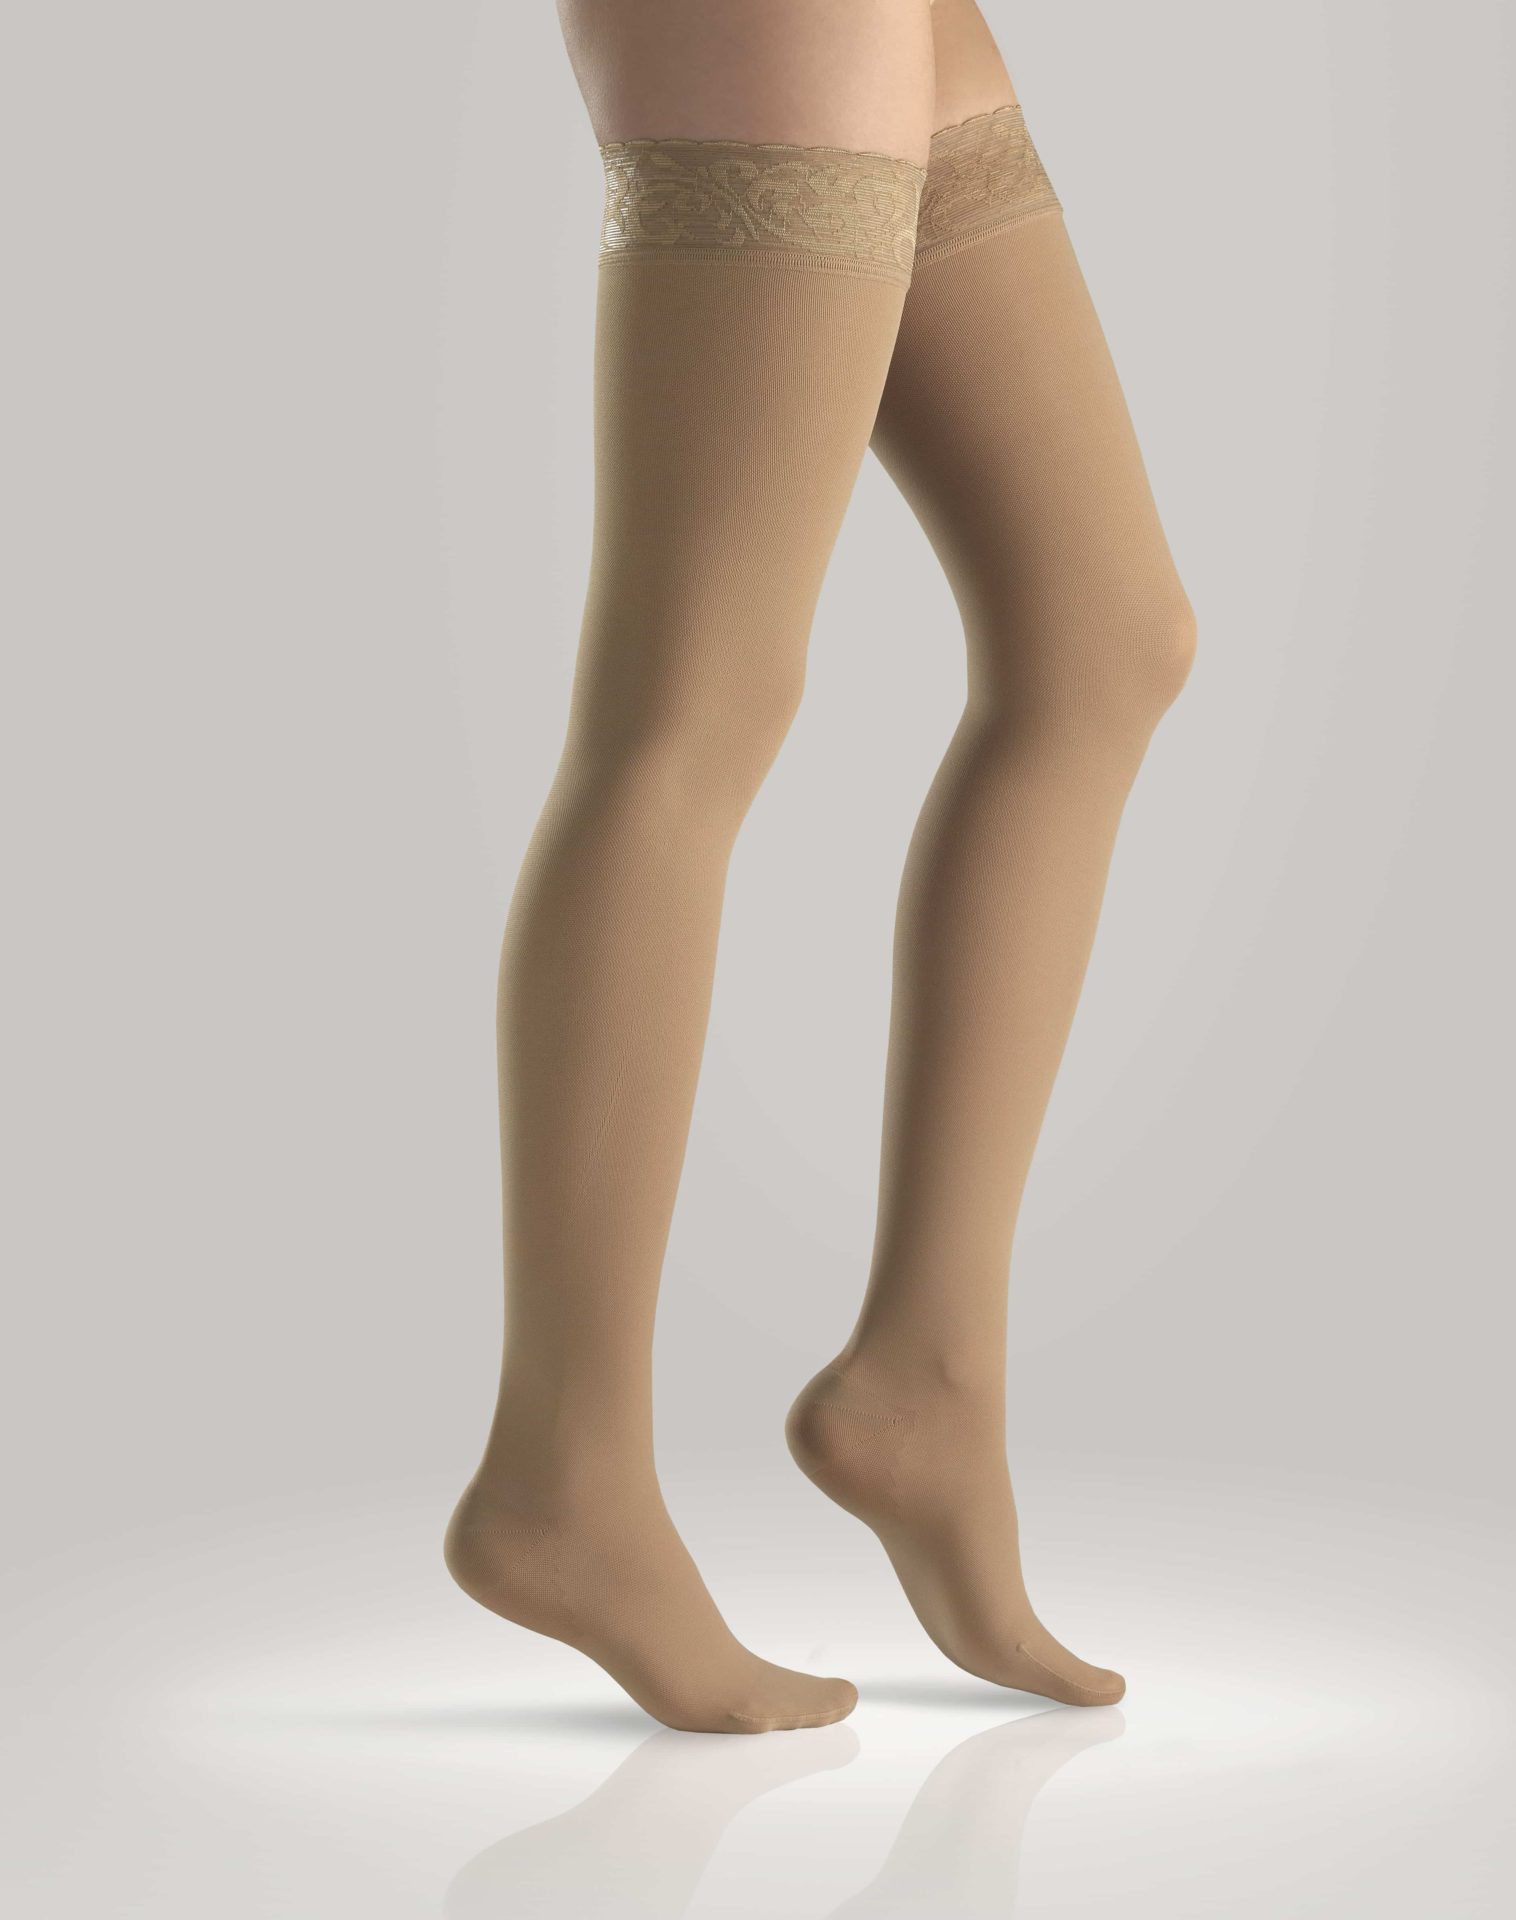 Memory thigh-length compression stockings